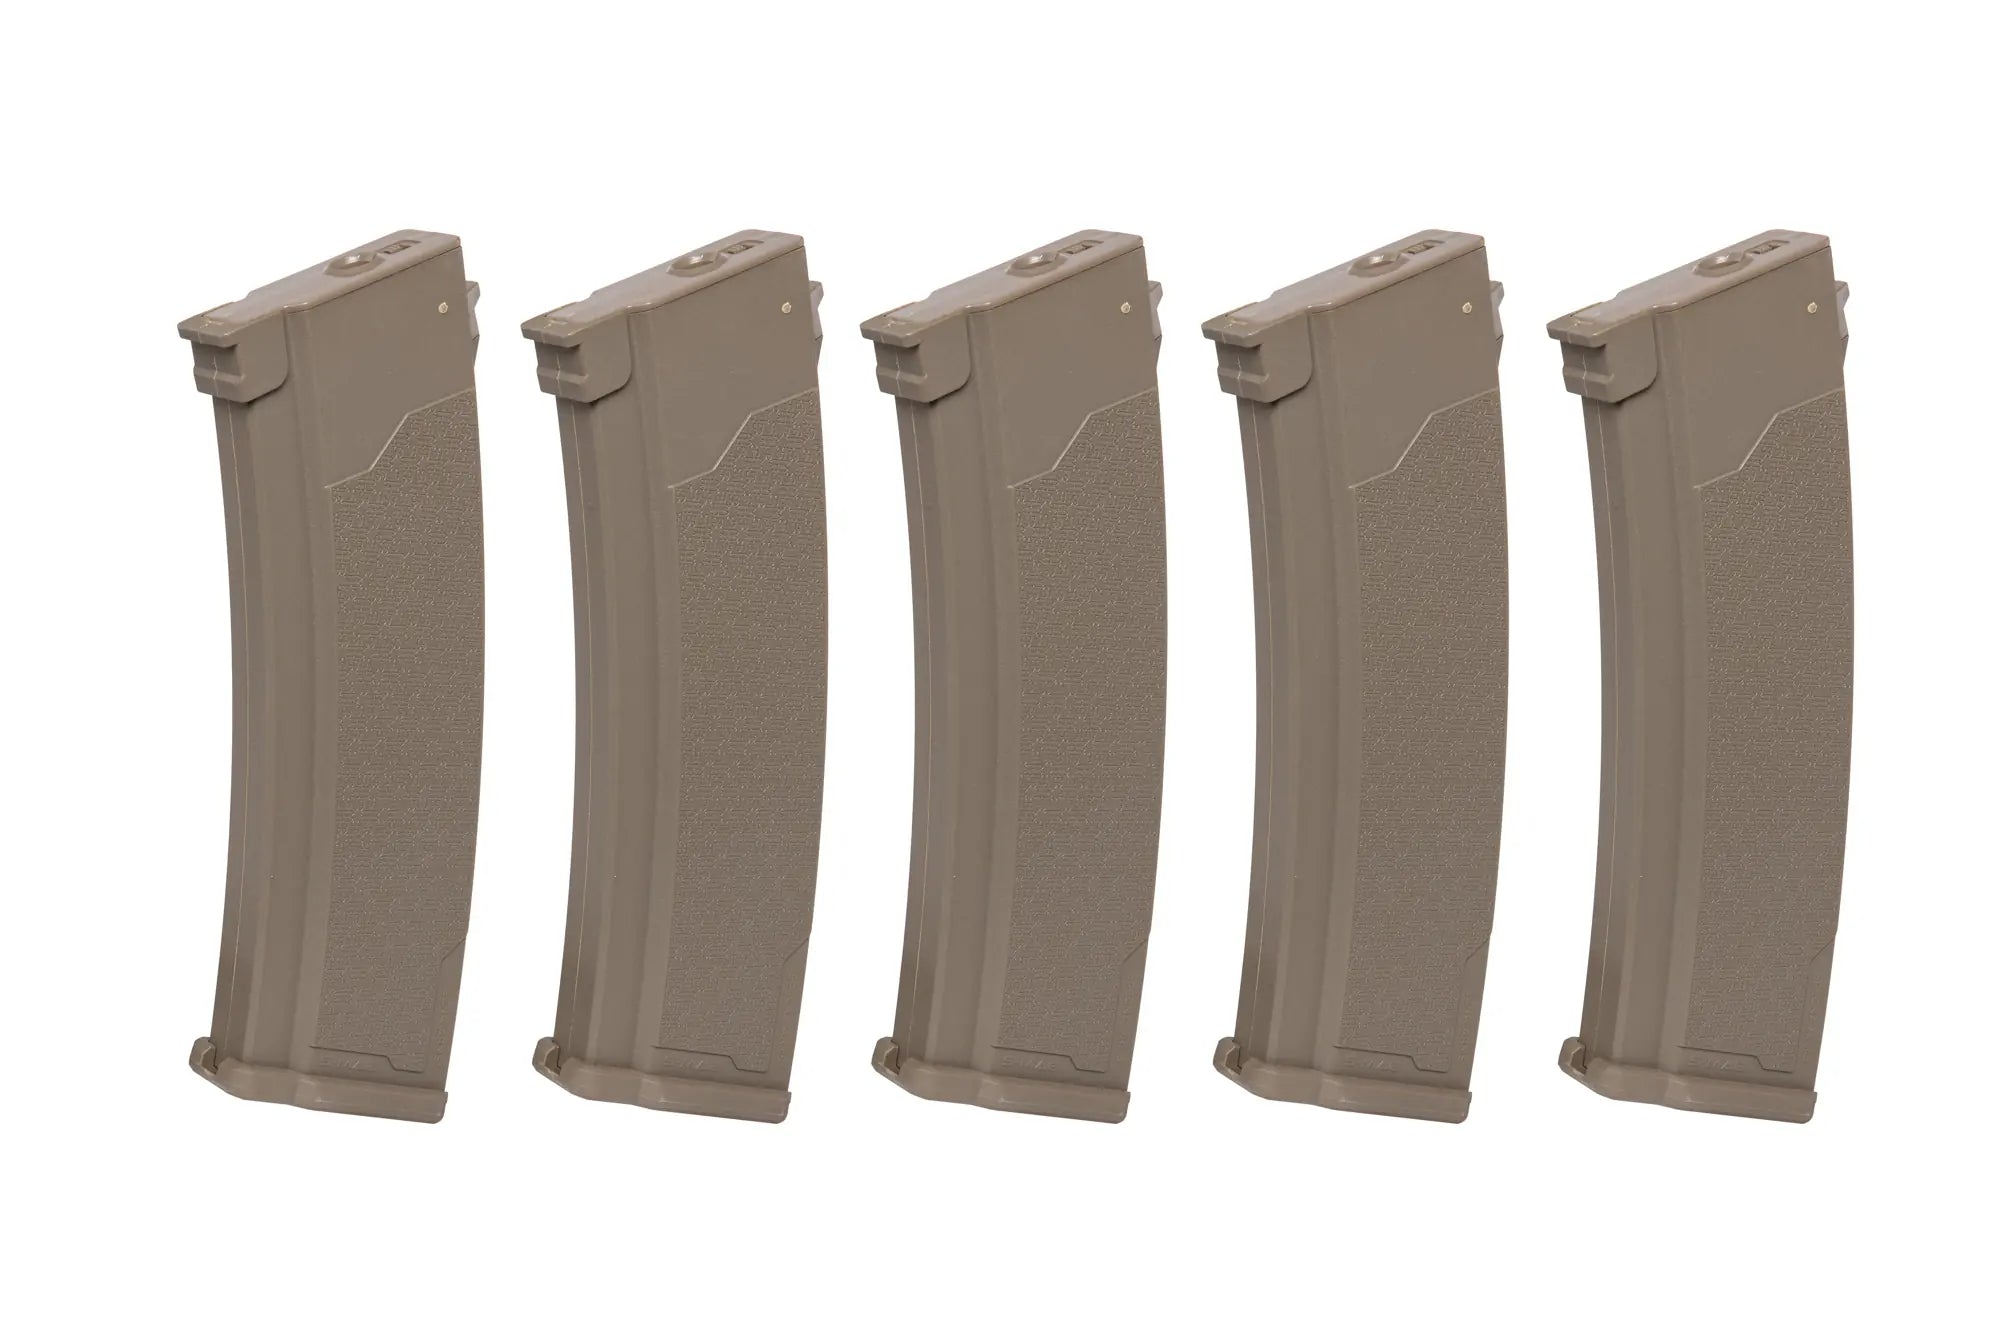 Set of 5 Mid-Cap S-Mag magazines for J series 175 pellets Tan-1